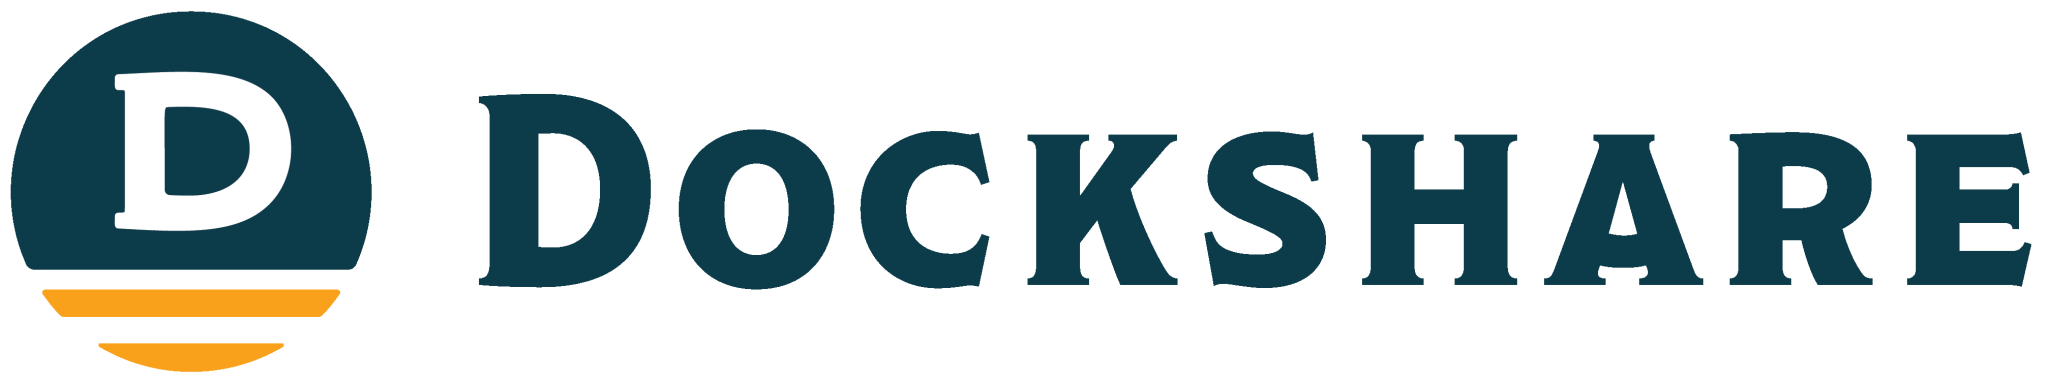 Dockshare company logo